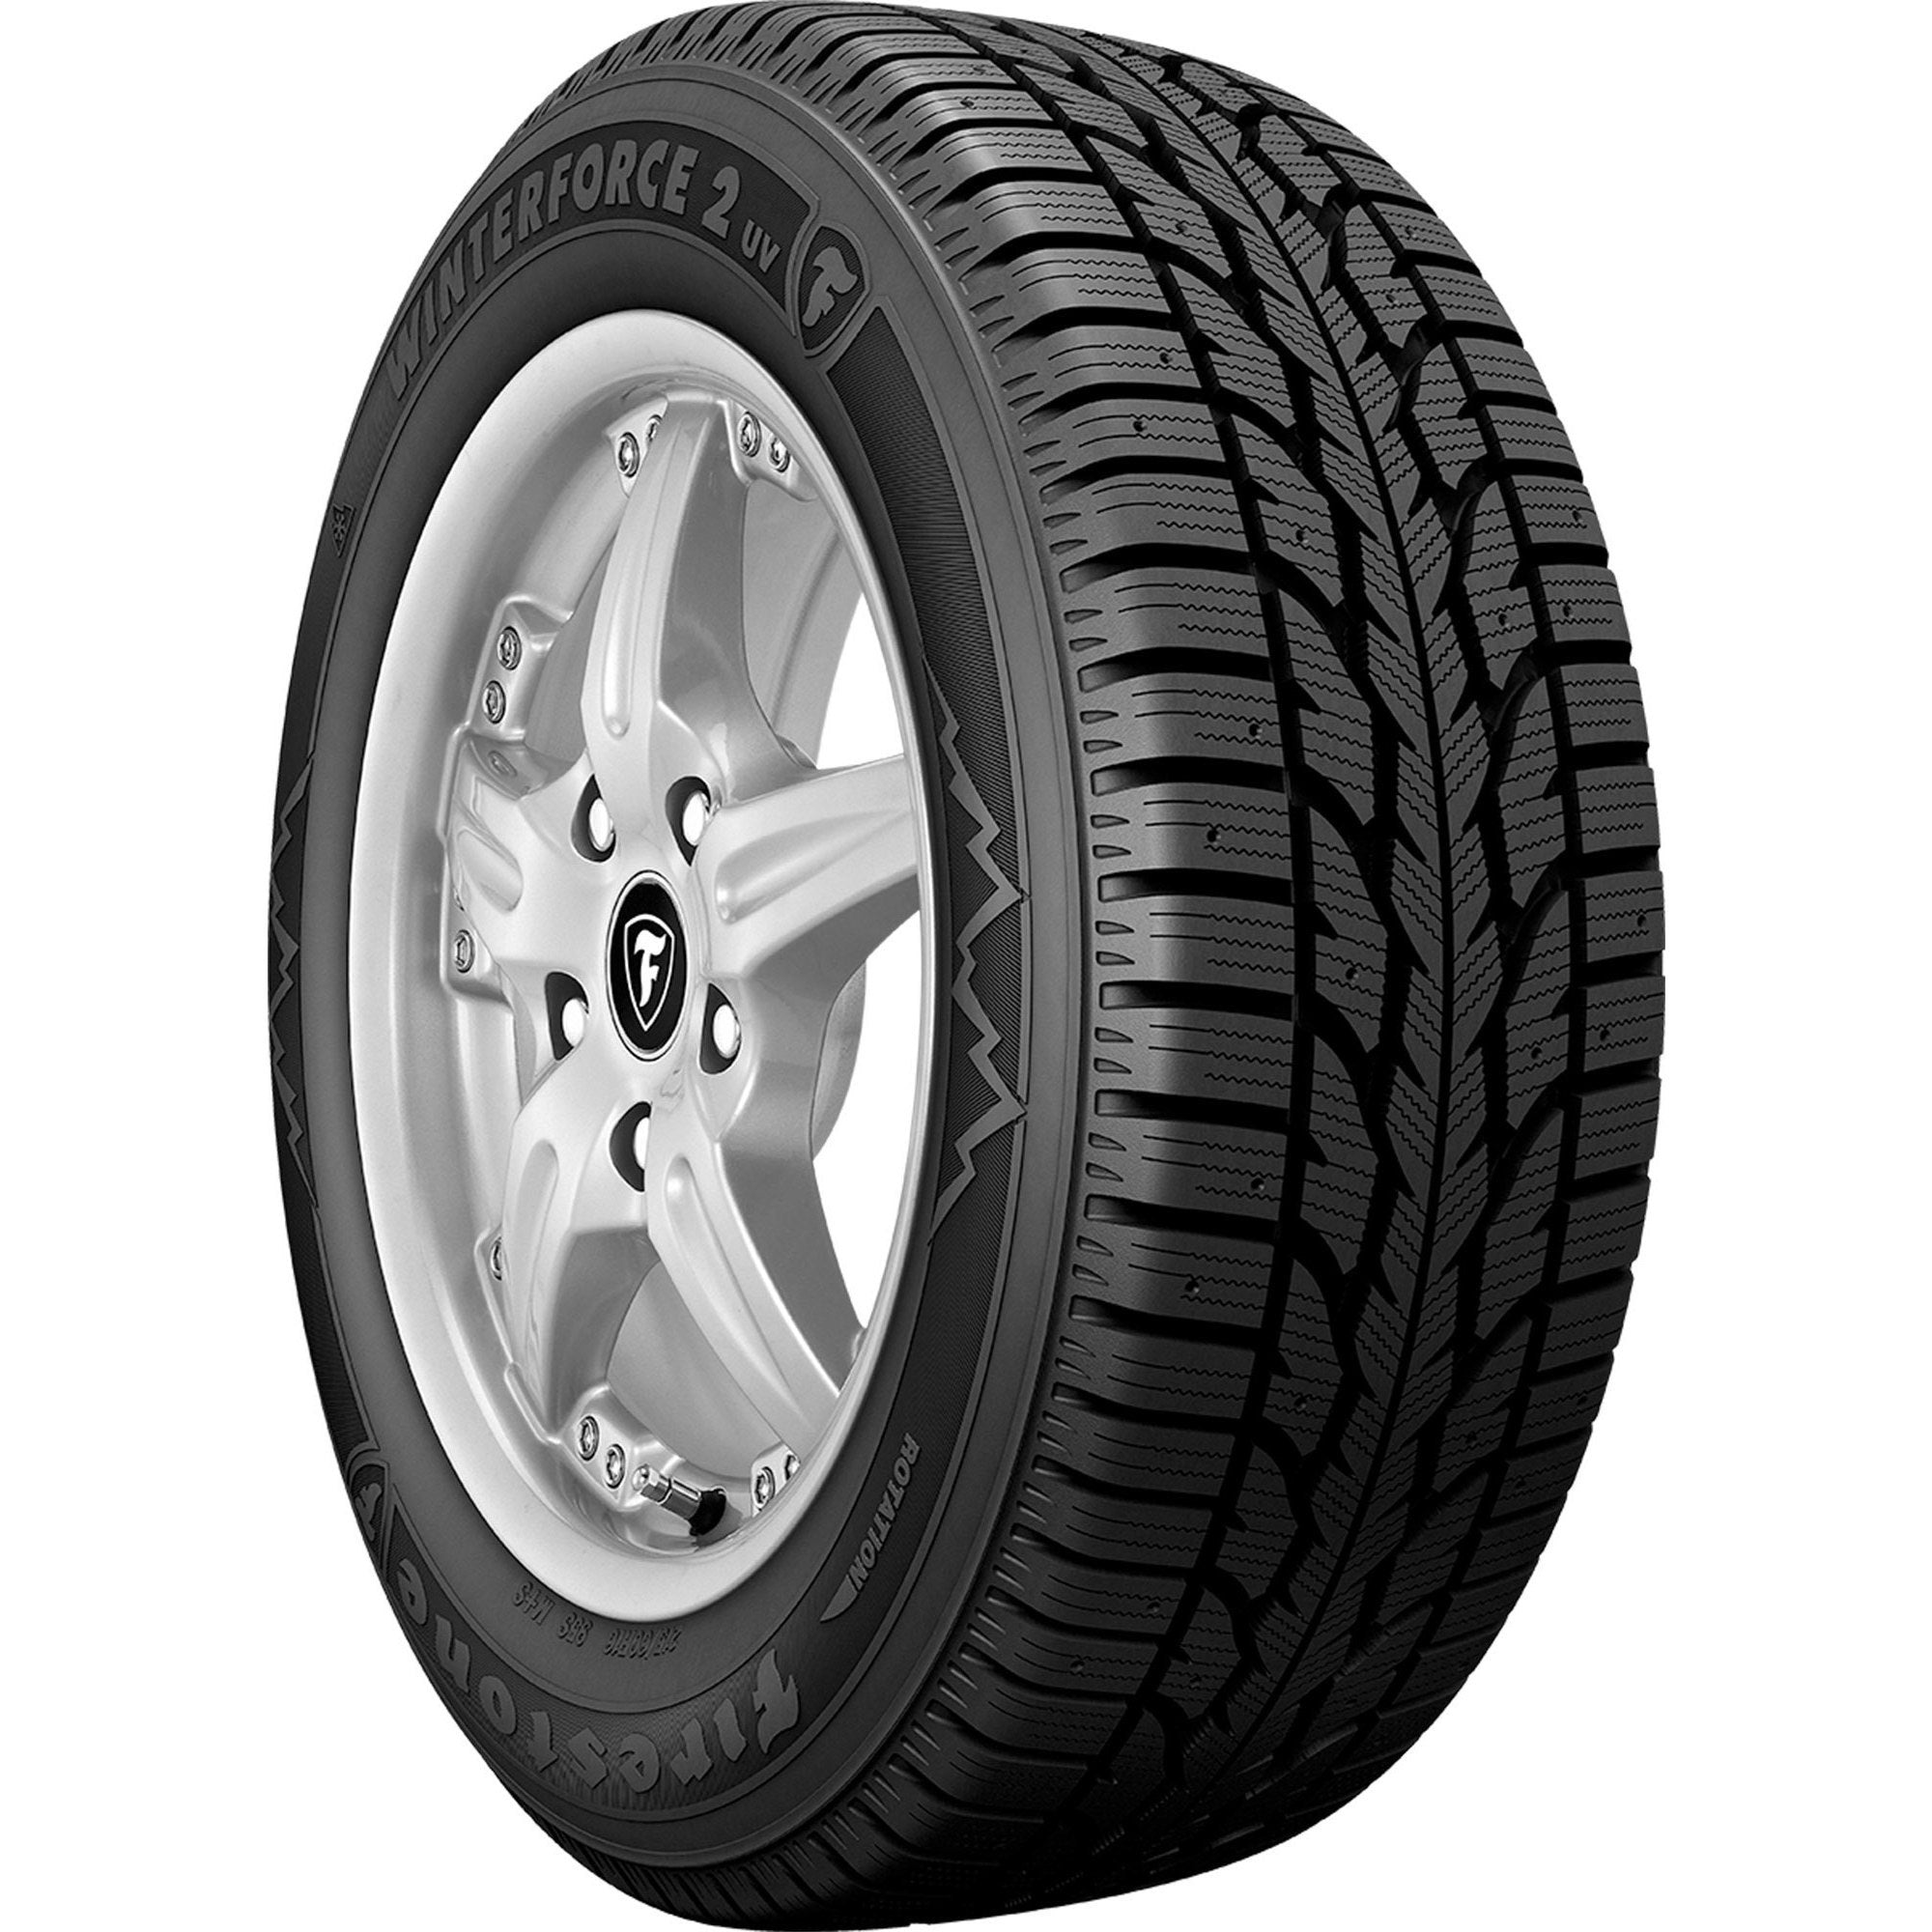 FIRESTONE WINTERFORCE2 UV P245/70R16 (29.5X9.7R 16) Tires